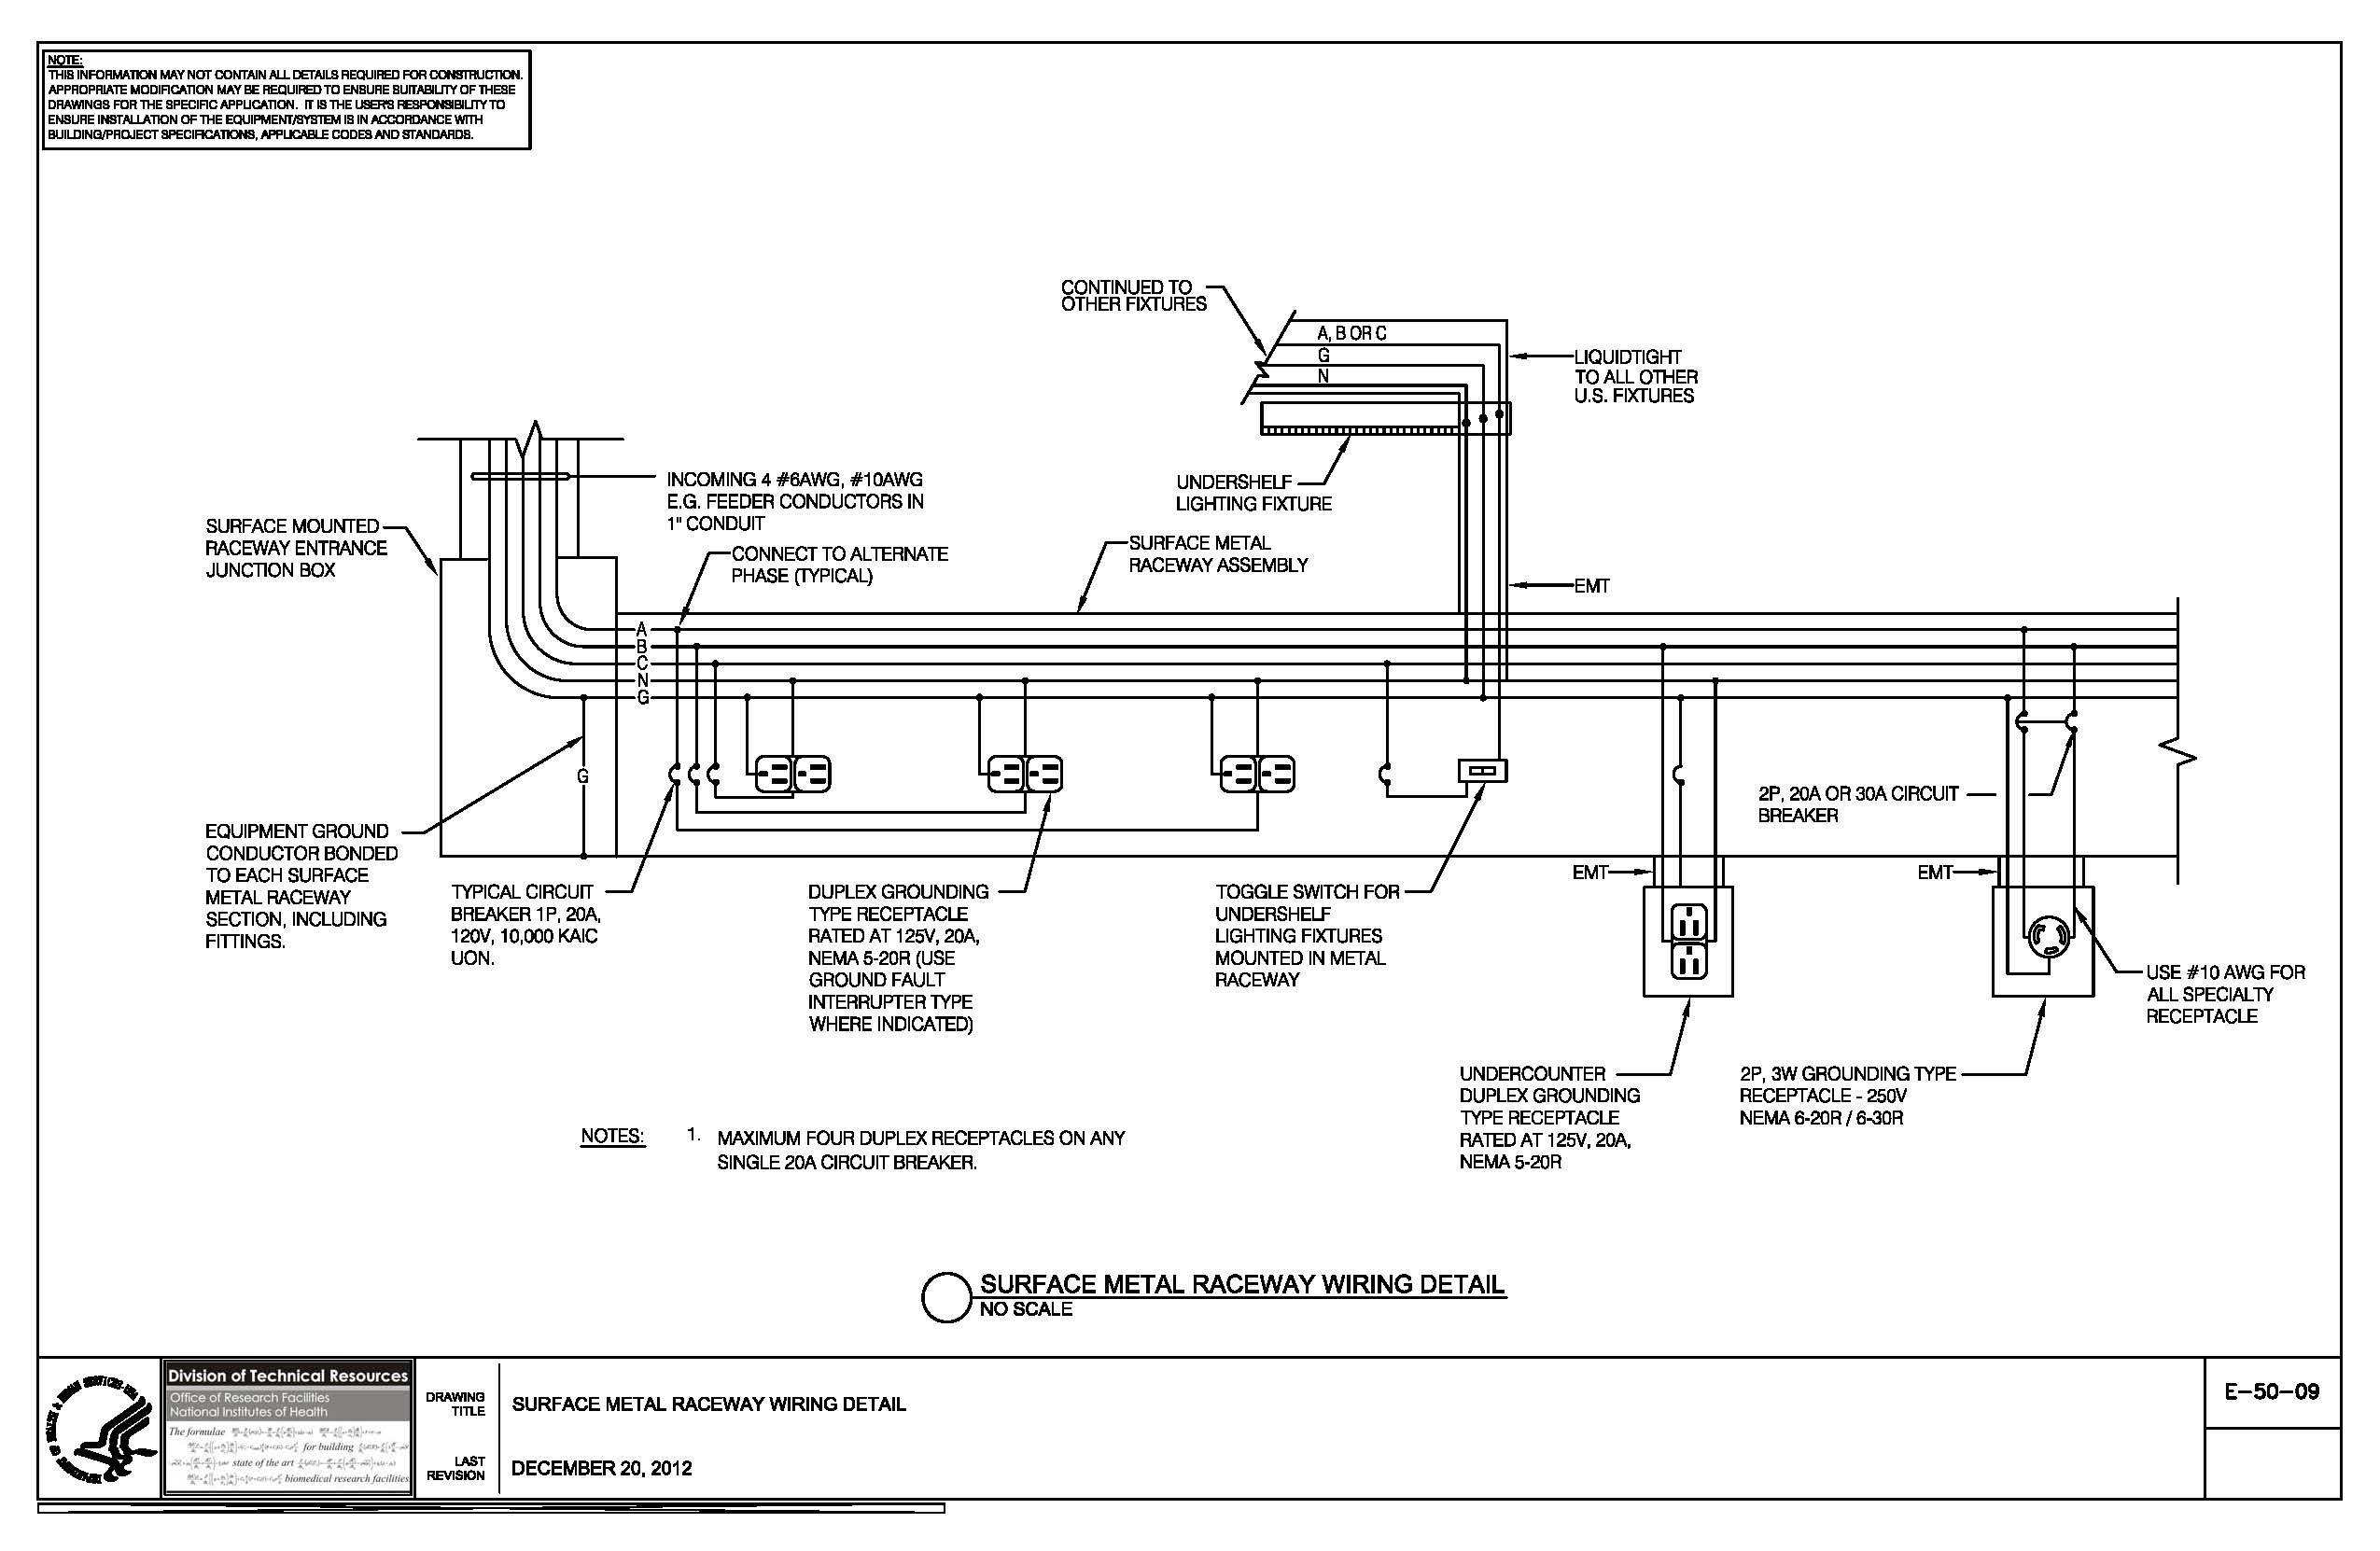 Conduit Wiring Diagram from www.orf.od.nih.gov